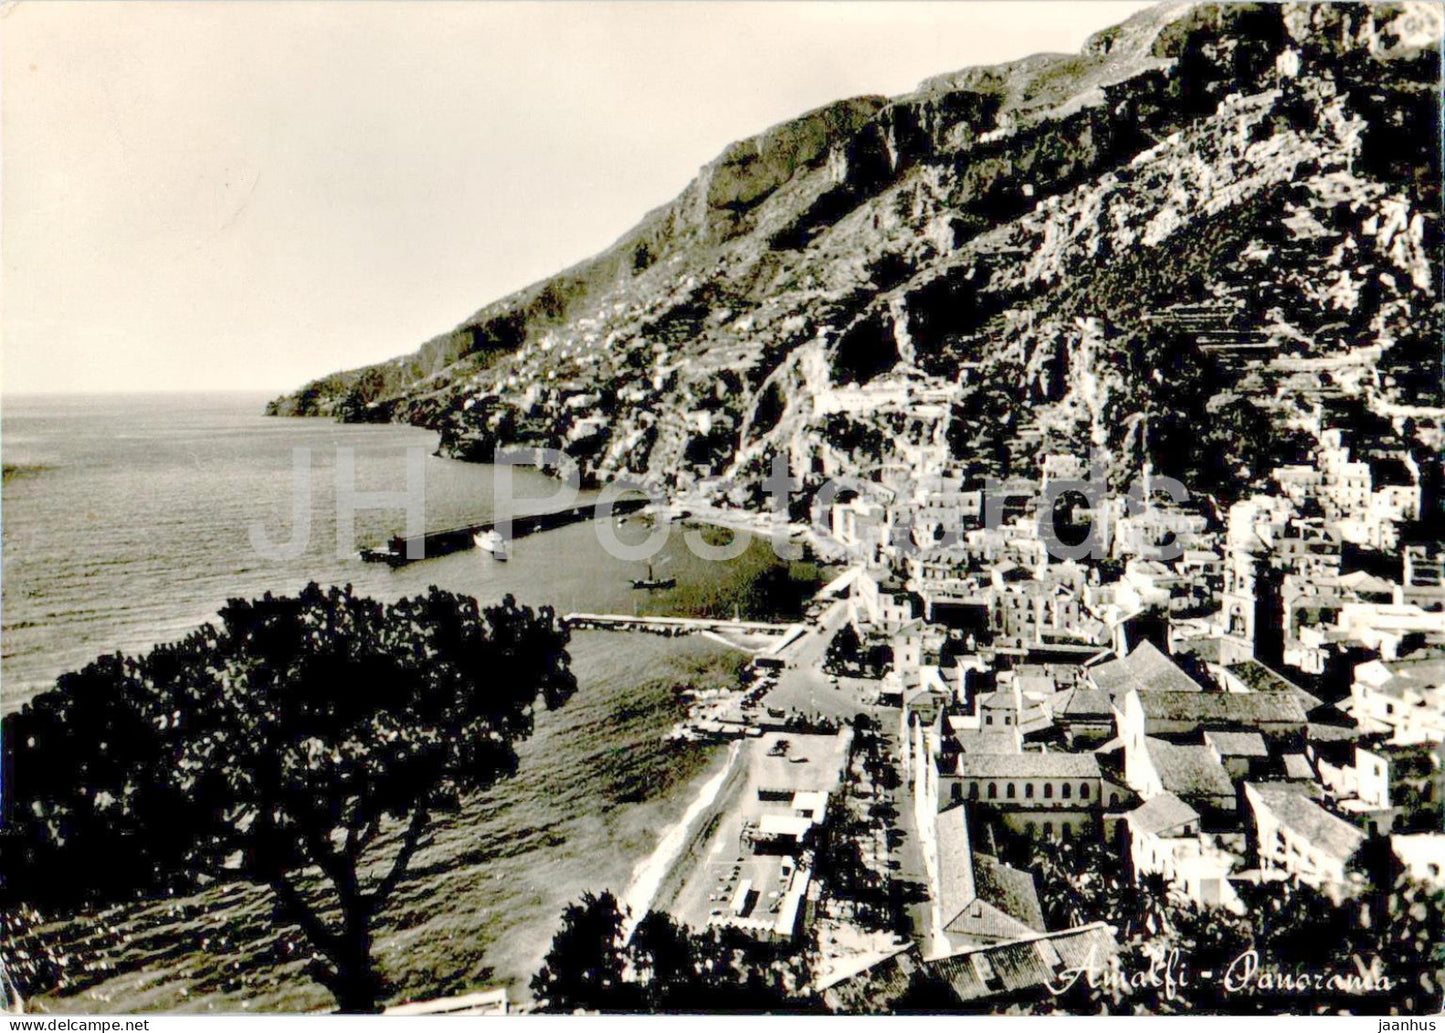 Amalfi - Panorama - 61 - old postcard - 1957 - Italy - used - JH Postcards